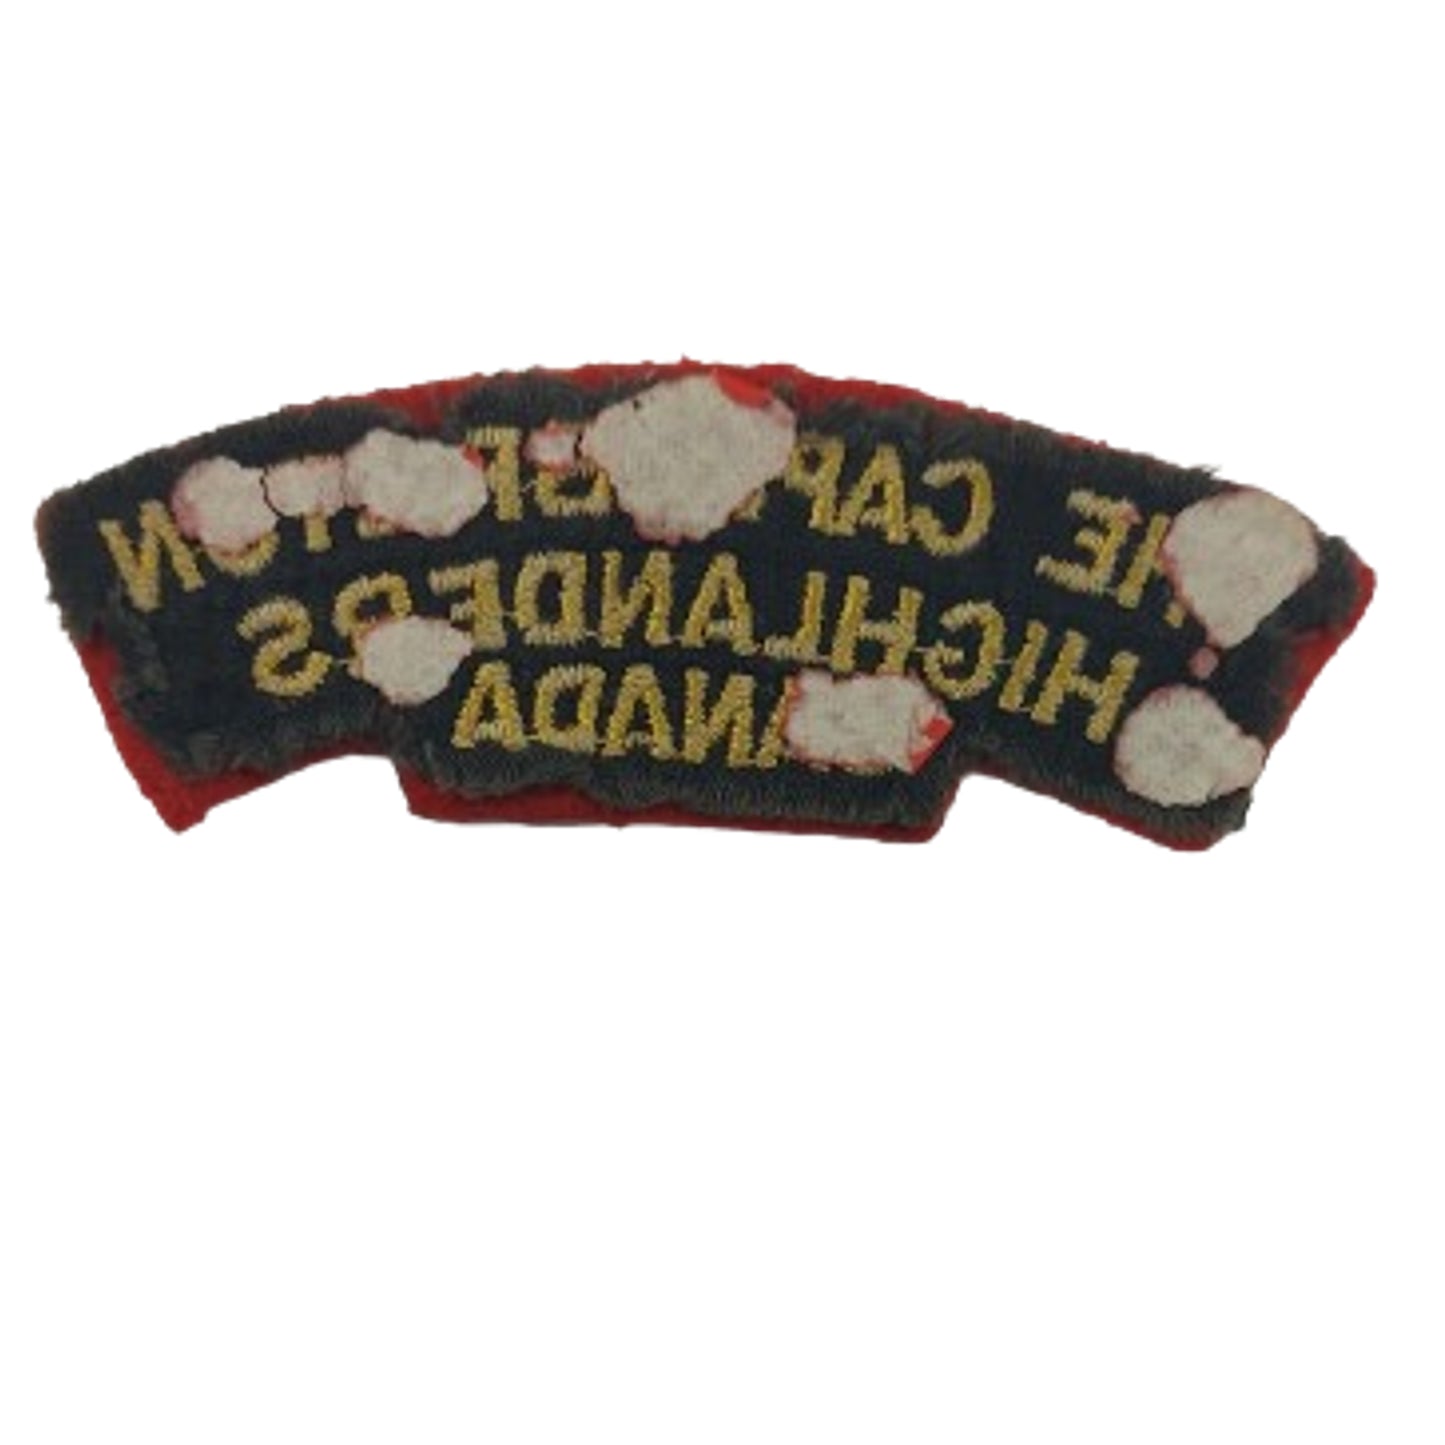 WW2 Canadian Cape Breton Highlanders Cloth Shoulder Title